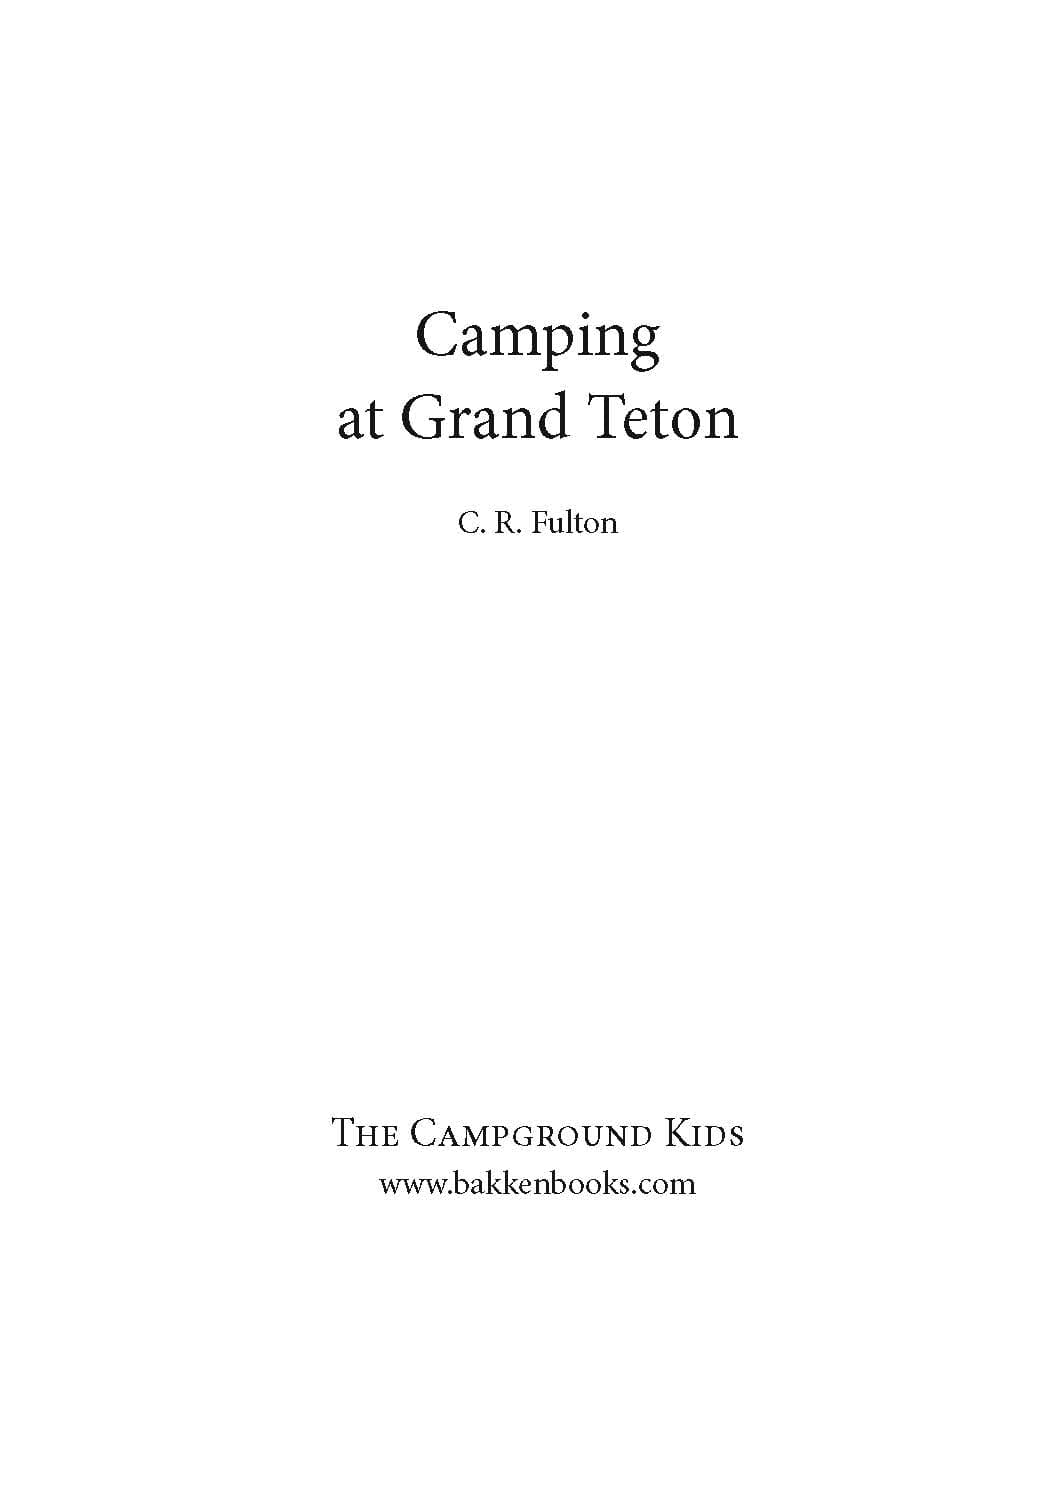 Grand Teton Stampede (Book #1)